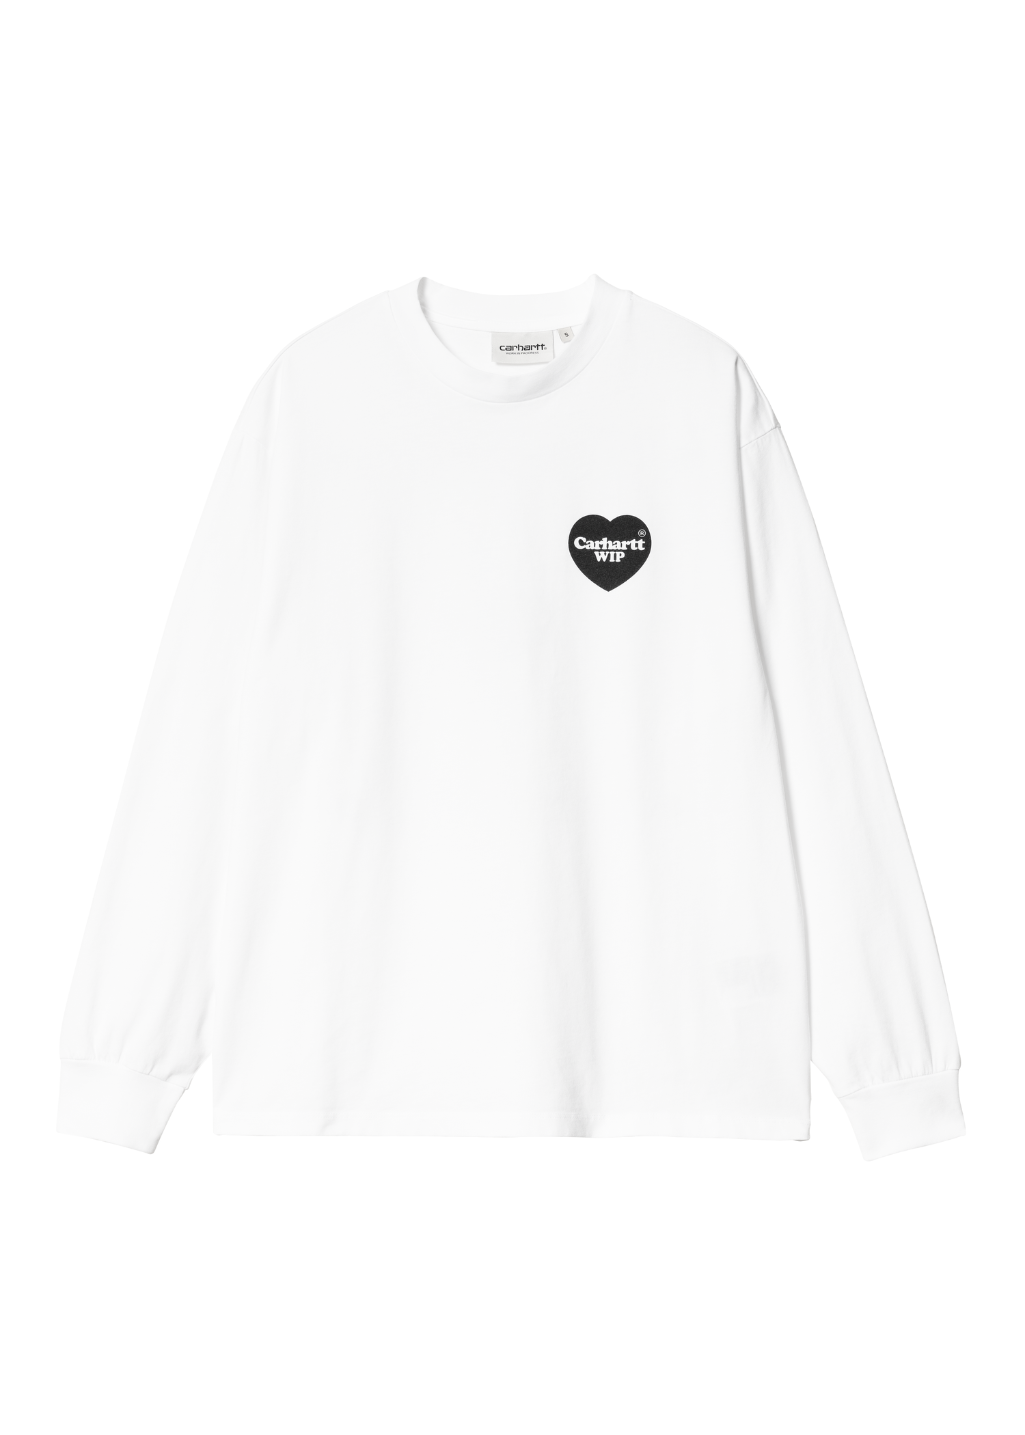 Carhartt WIP - W' L/S Heart Bandana T-Shirt - White/Black Stone Washed - Hardpressed Print Studio Inc.